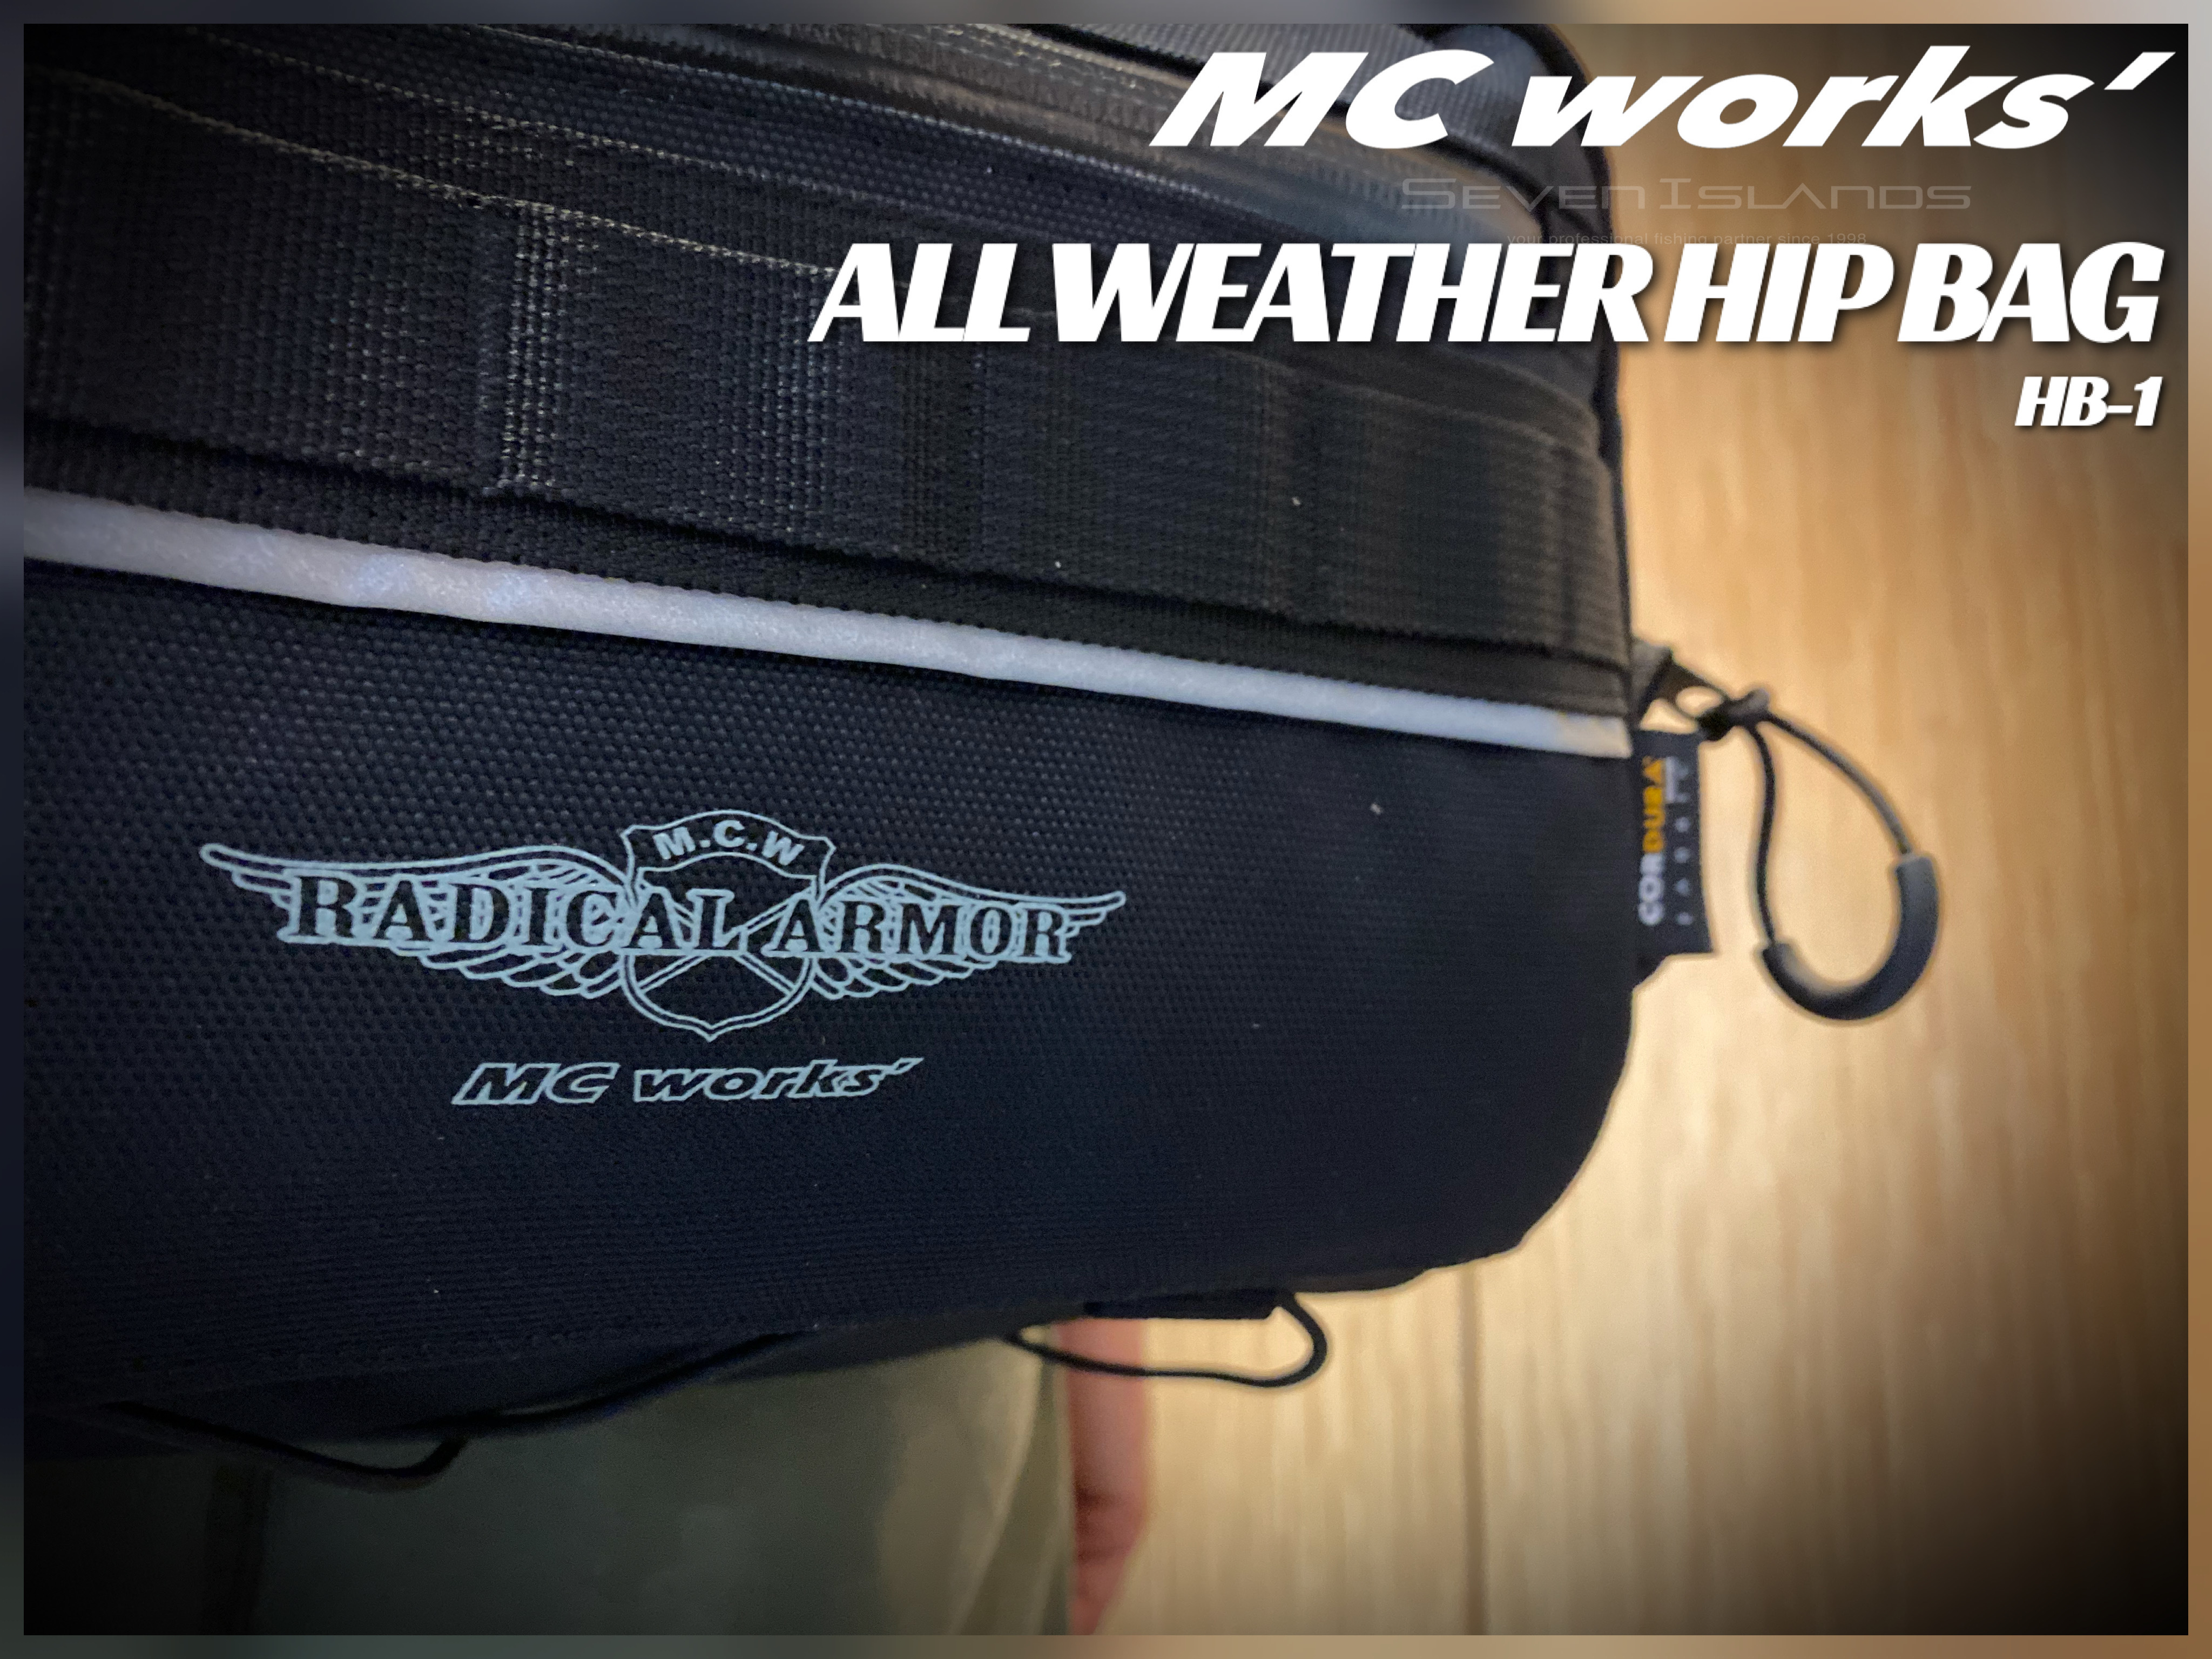 MC WORKS' ALL WEATHER HIP BAG HB-1